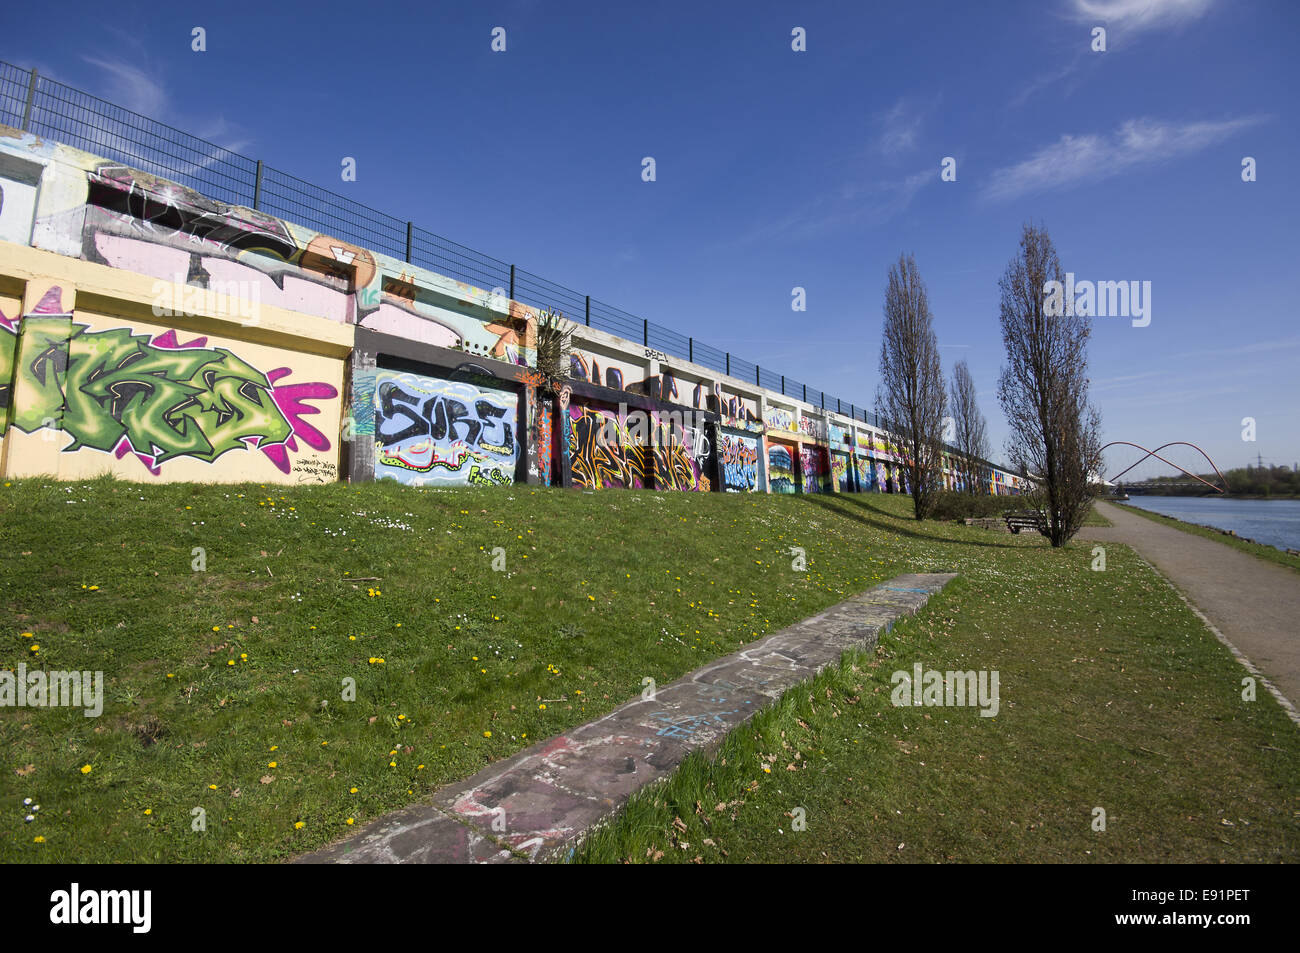 Graffity wall, Gelsenkirchen, Germany Stock Photo